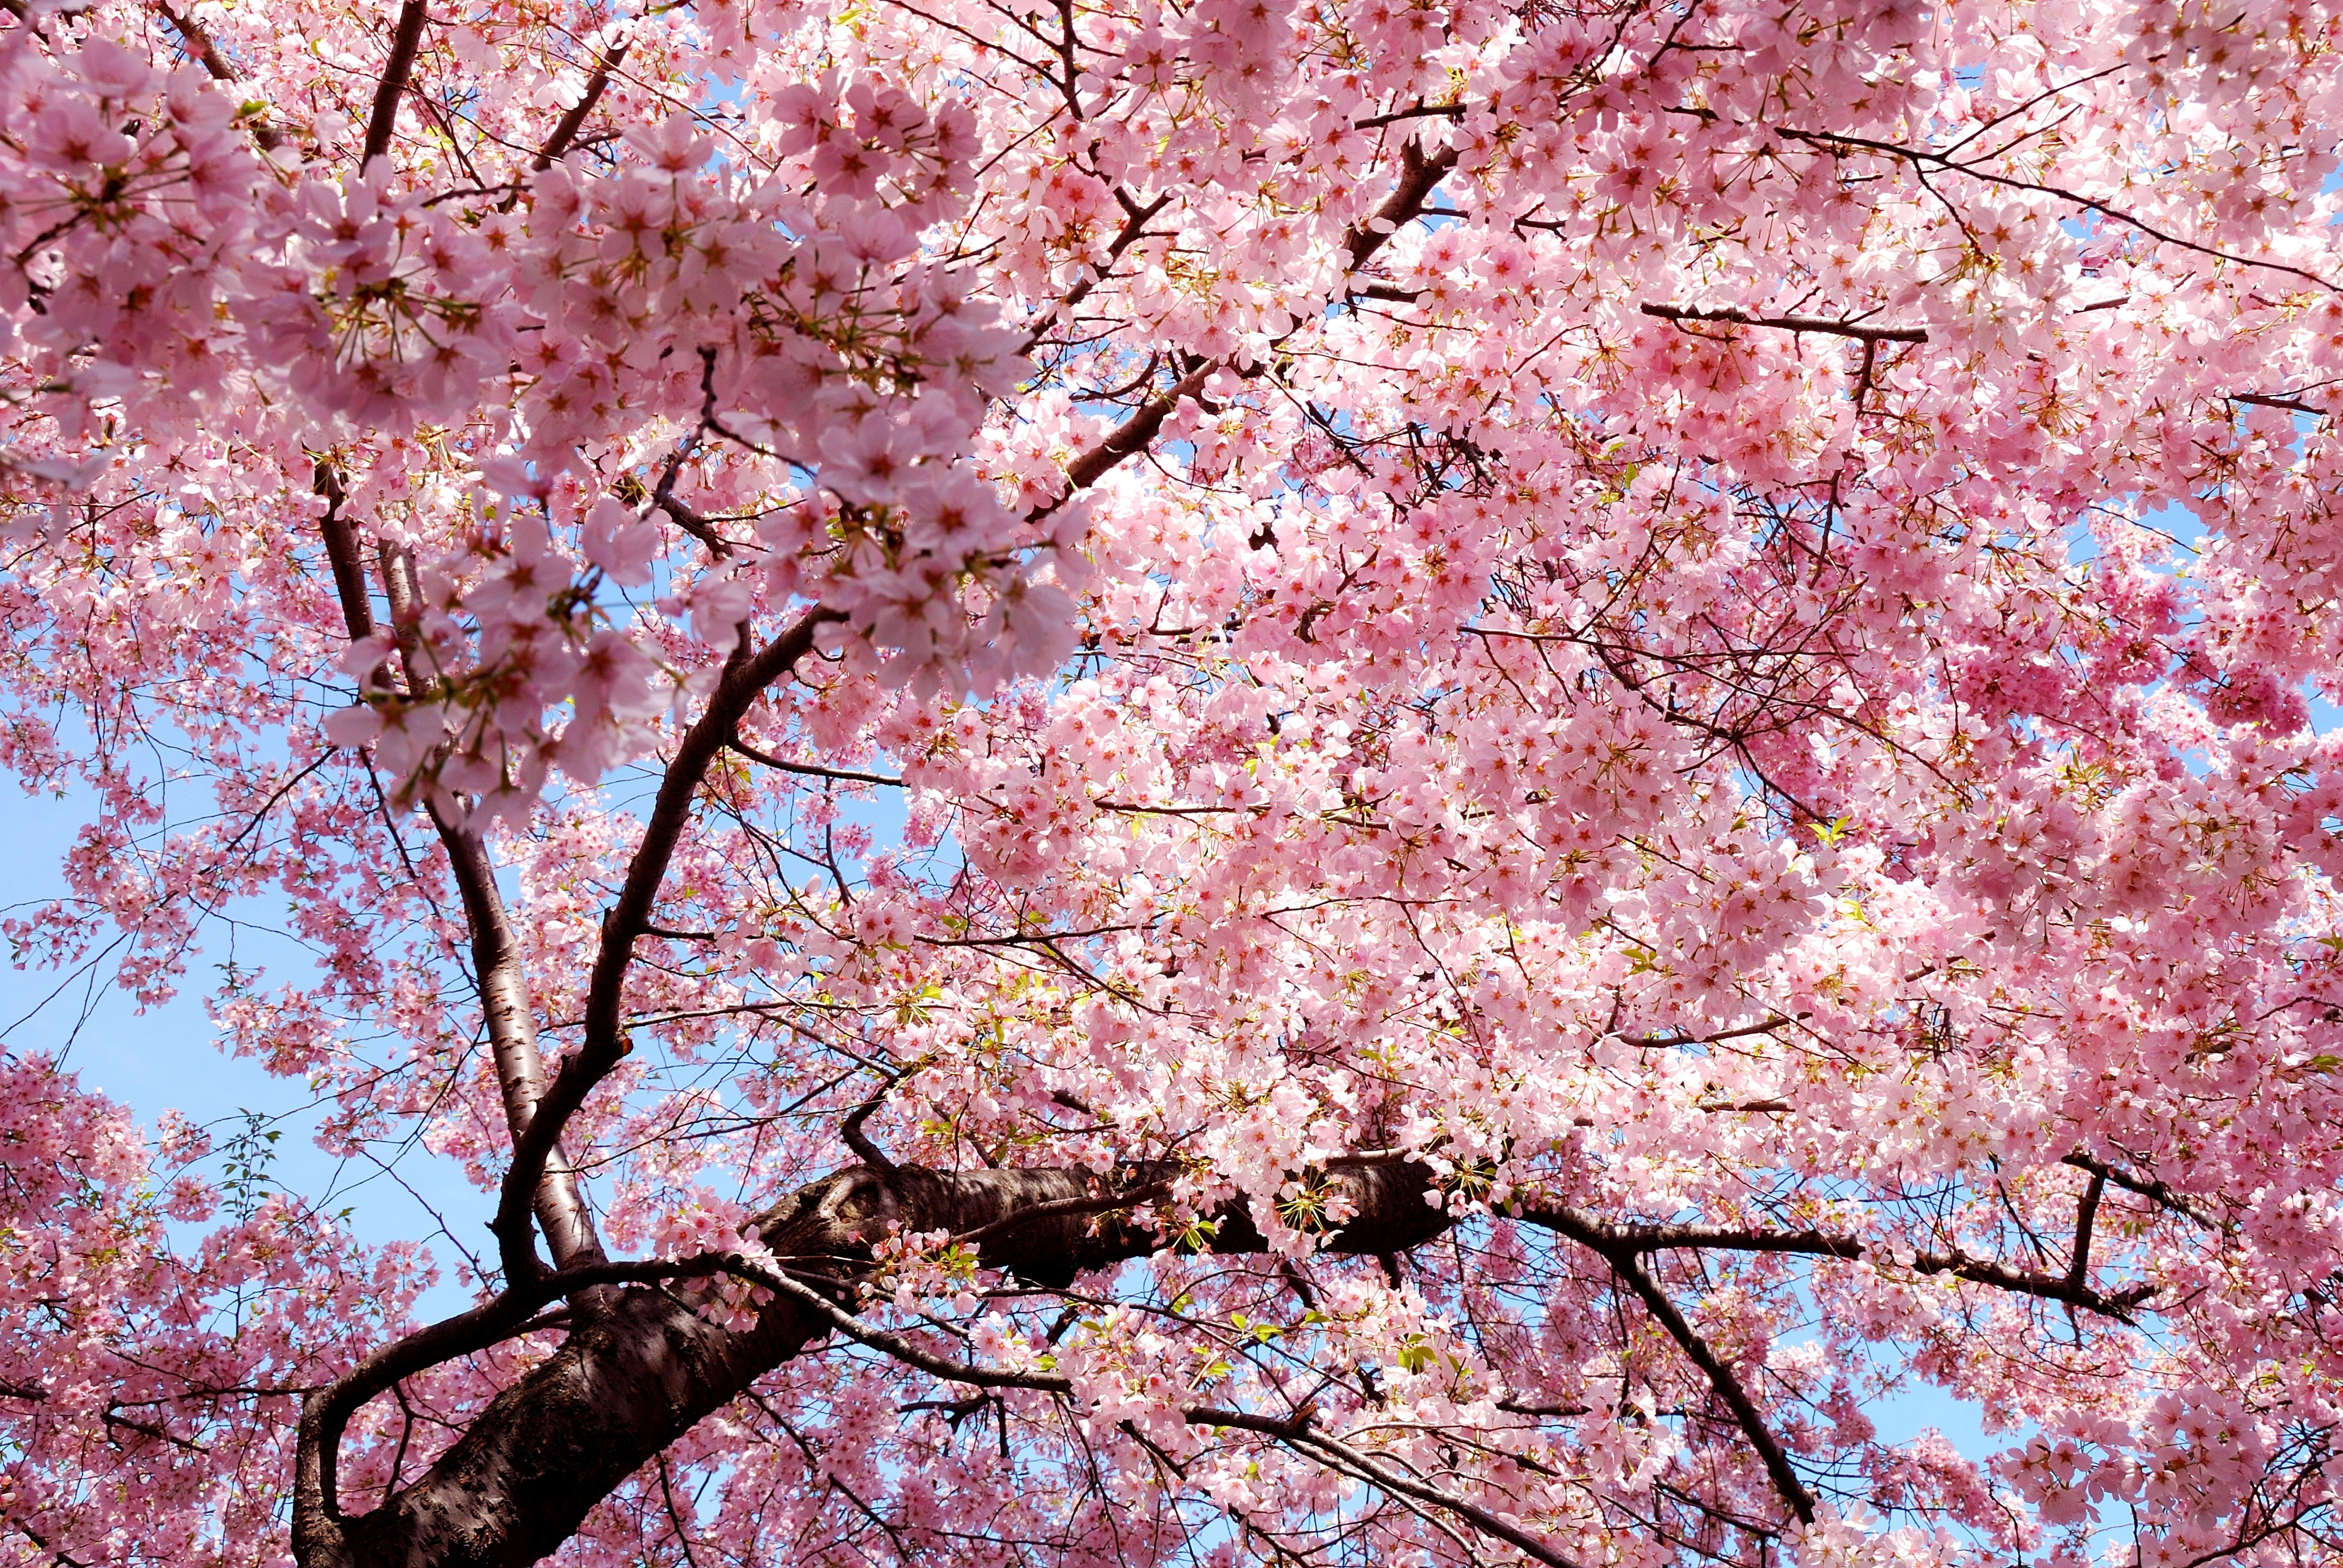 Cherry blossom отзывы. Черри блоссом цветок. Черри блоссом дерево деревья. Сакура черри блоссом. Черри блоссом май.